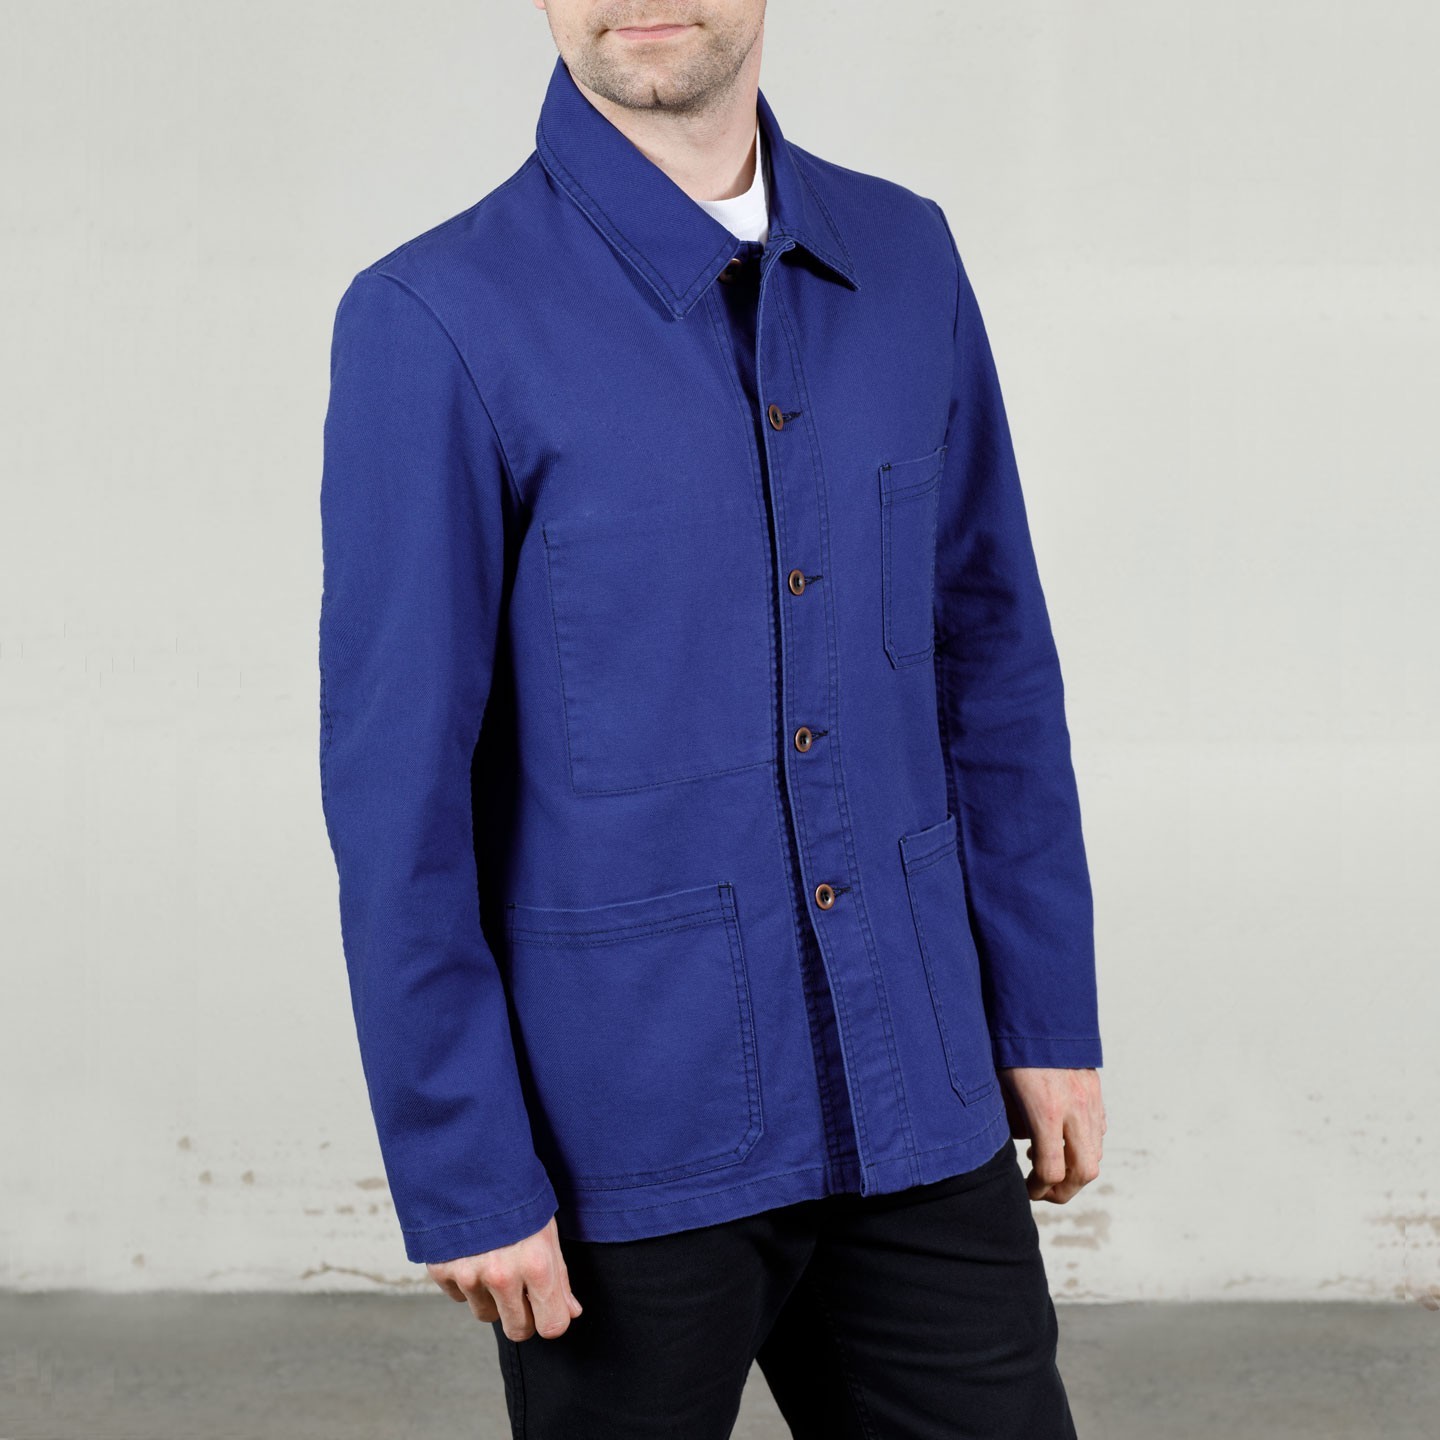 VETRA Workwear Jacket in organic cotton twill fabric 1C/5C hydrone